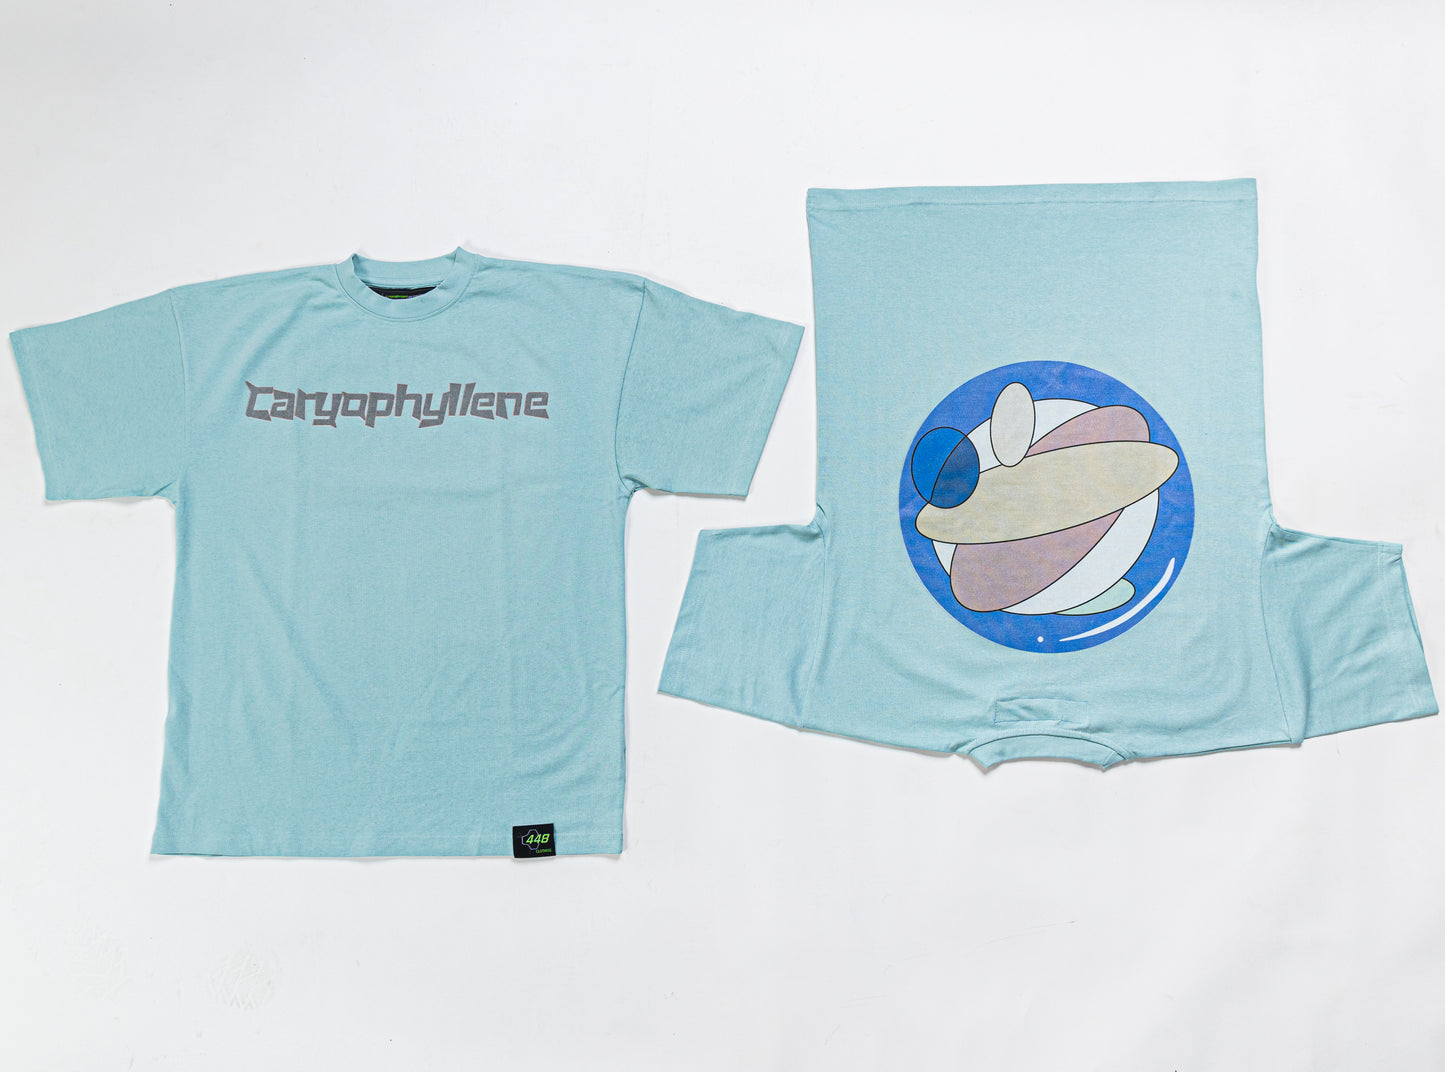 Caryophyllene Shirt